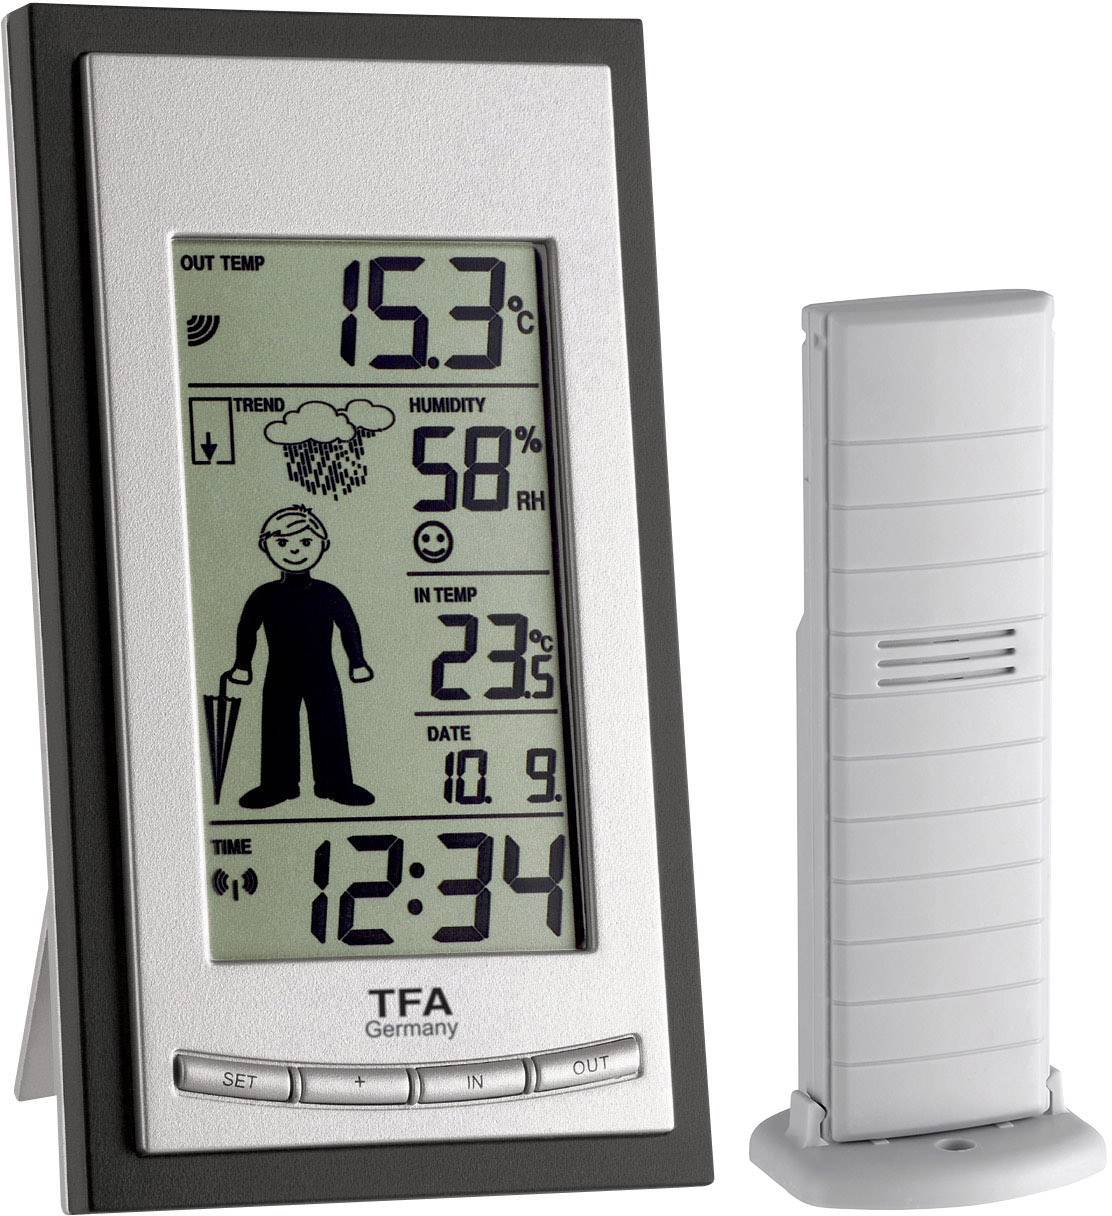 Black TFA-Dostmann 35.1084 Weather Boy Wireless Weather Station